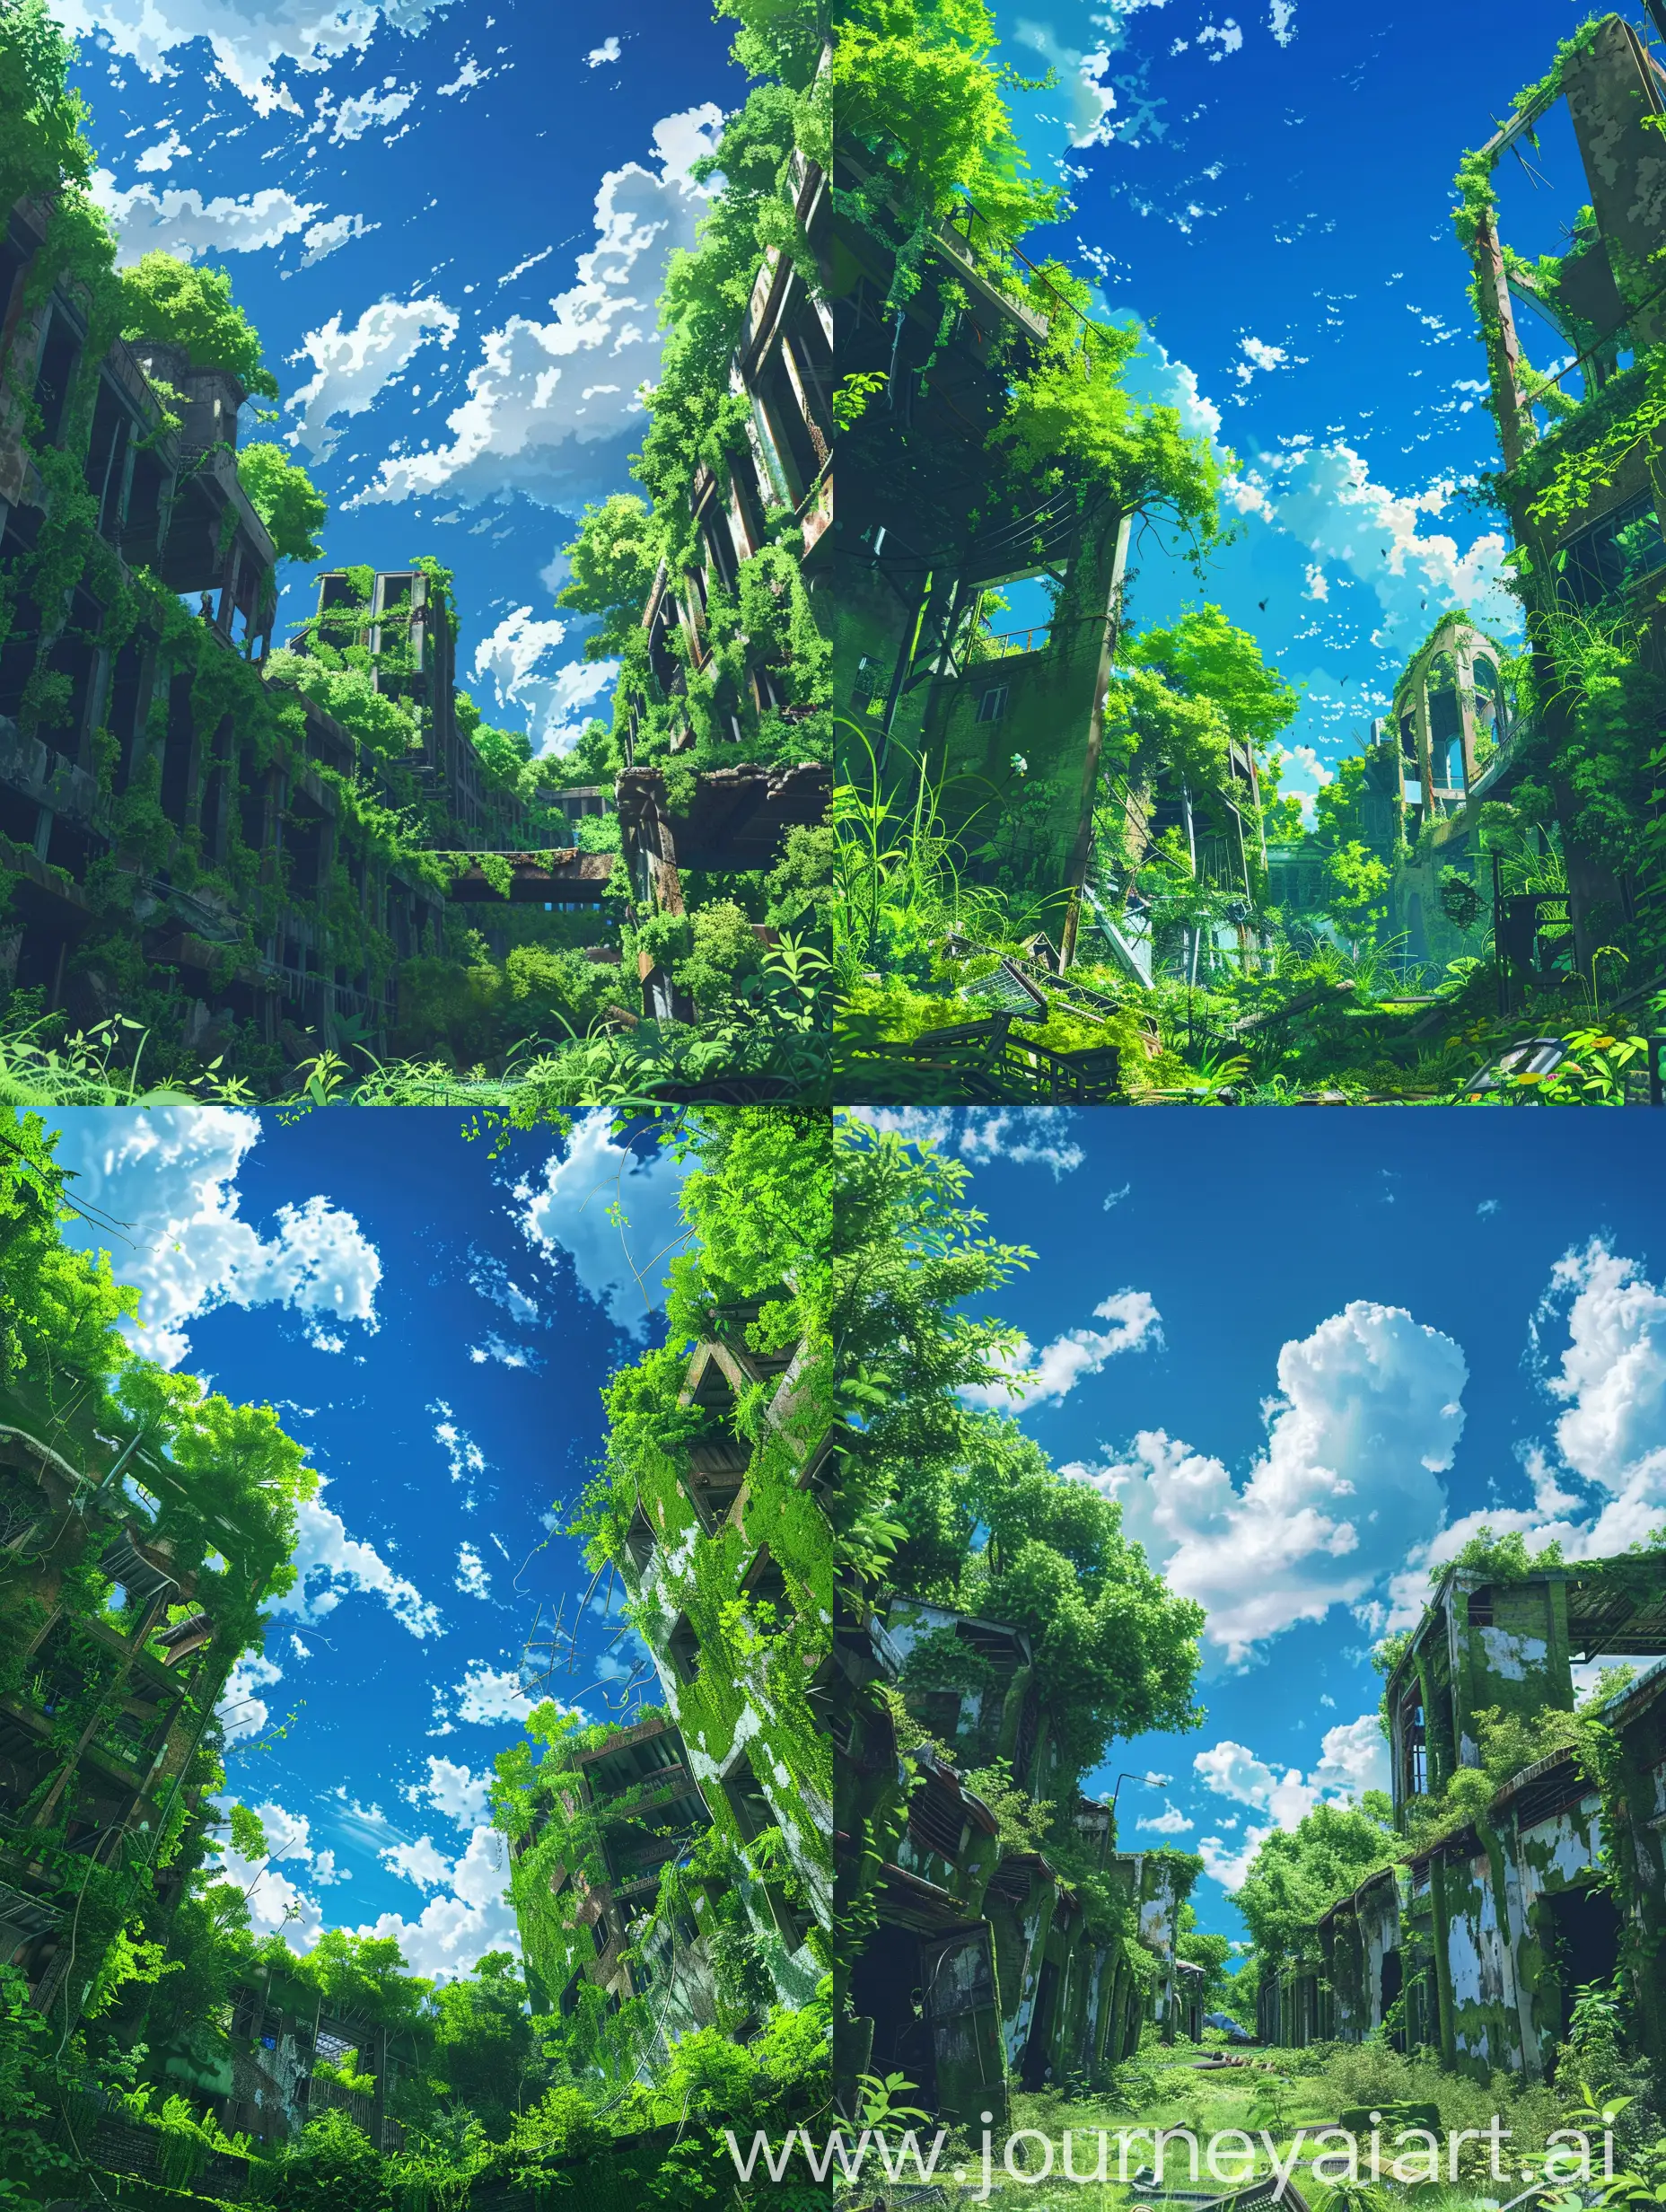 Abandoned-City-Overgrown-with-Lush-Greenery-Studio-Ghibli-Anime-Style